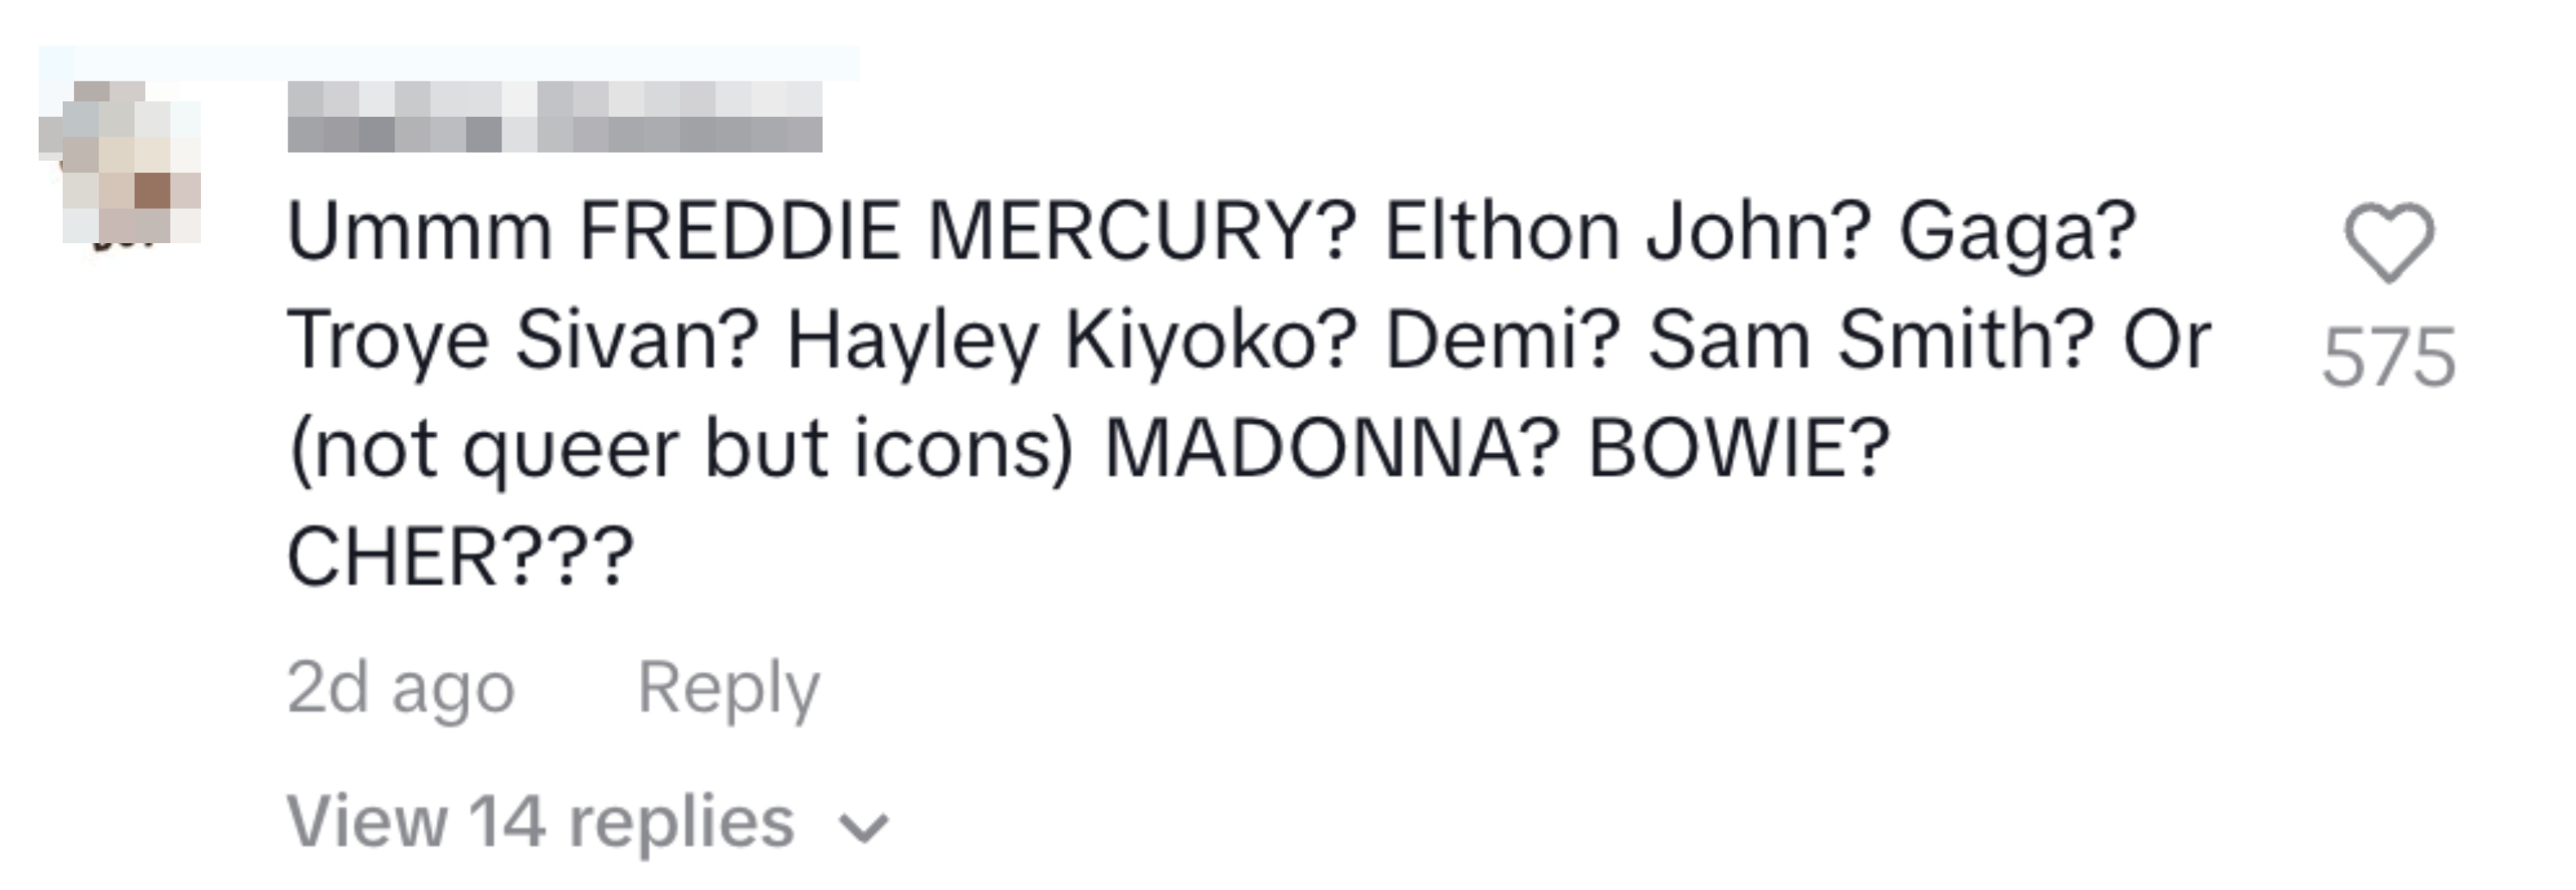 Text in image: User lists musicians Freddie Mercury, Elton John, Gaga, Troye Sivan, Hayley Kiyoko, Demi, Sam Smith, Madonna, Bowie, Cher, questioning their status